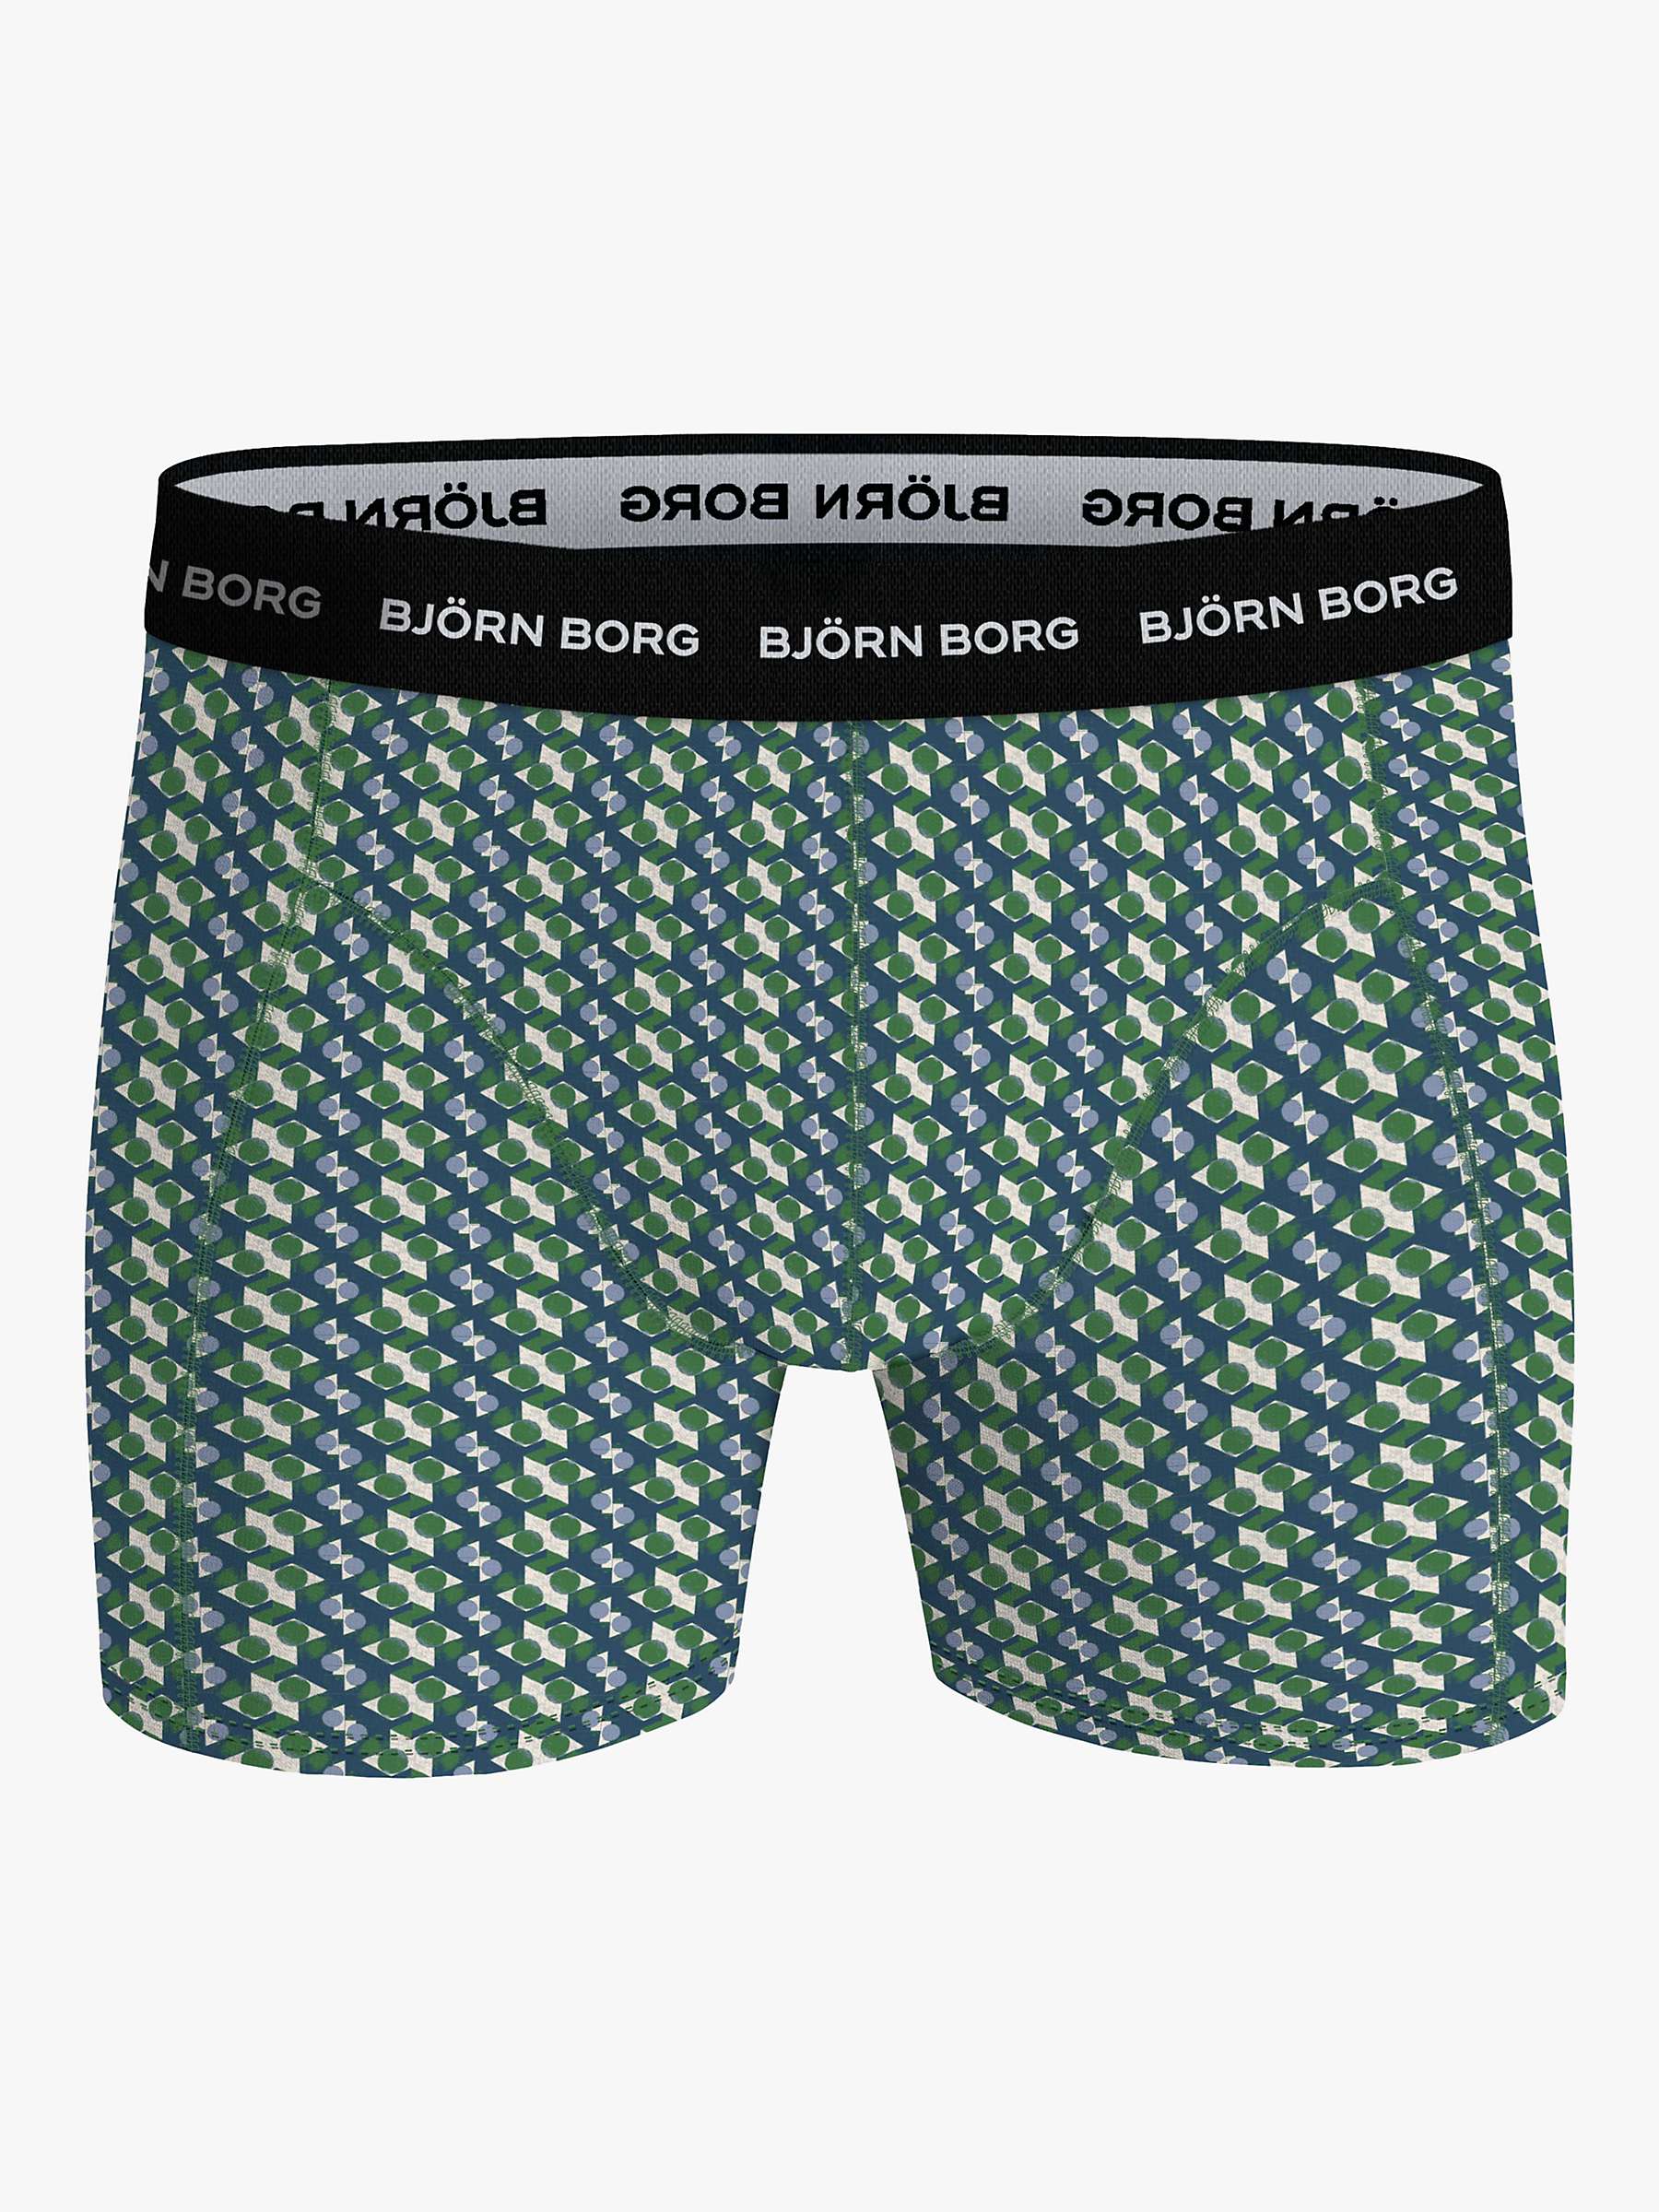 Buy Björn Borg Cotton Blend Stretch Trunks, Pack of 5, Green/Black/Grey Online at johnlewis.com